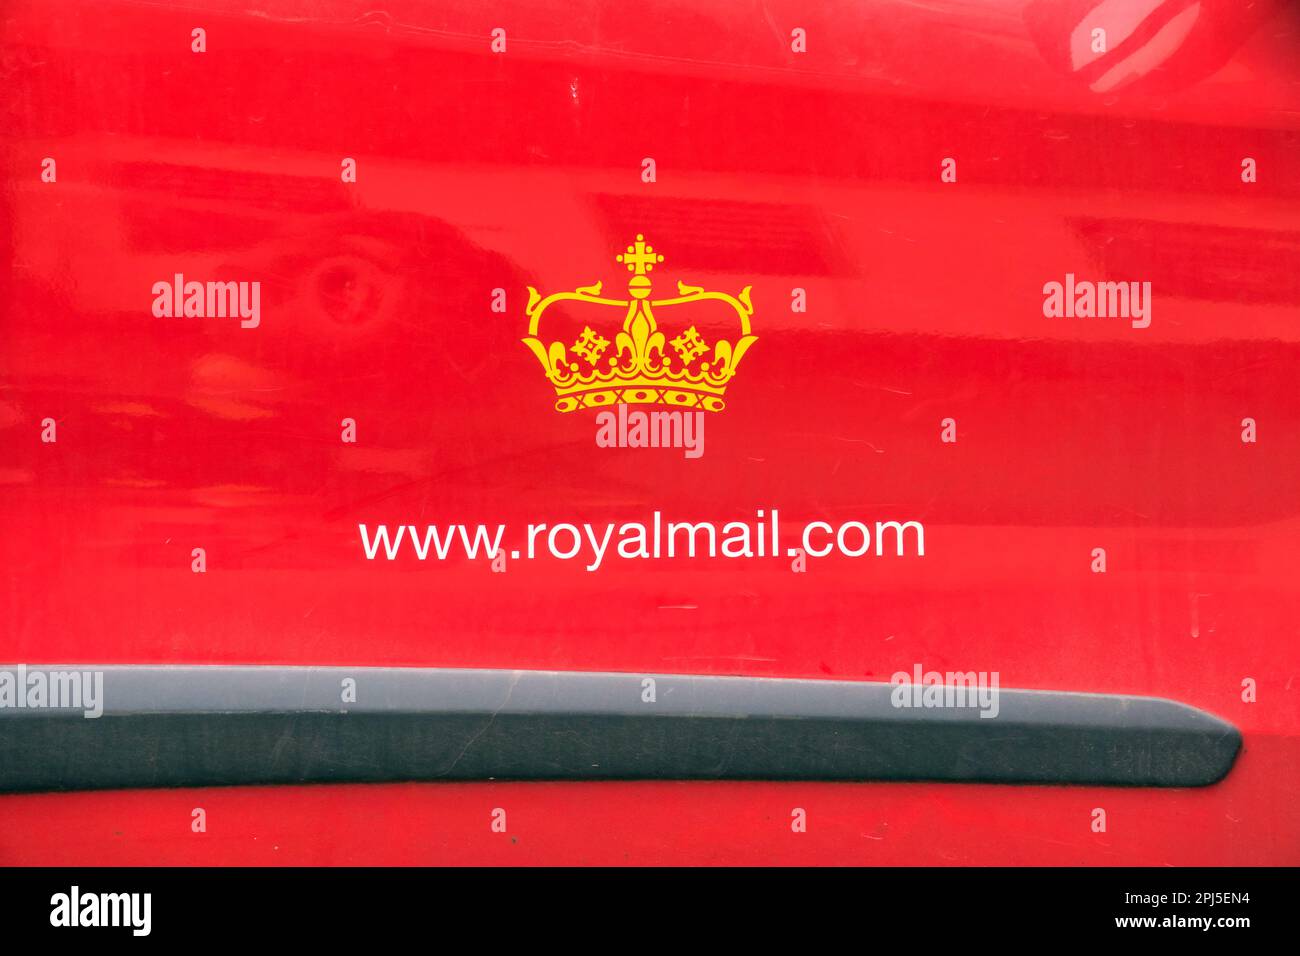 royal mail logo on van www.Royalmail.com Stock Photo